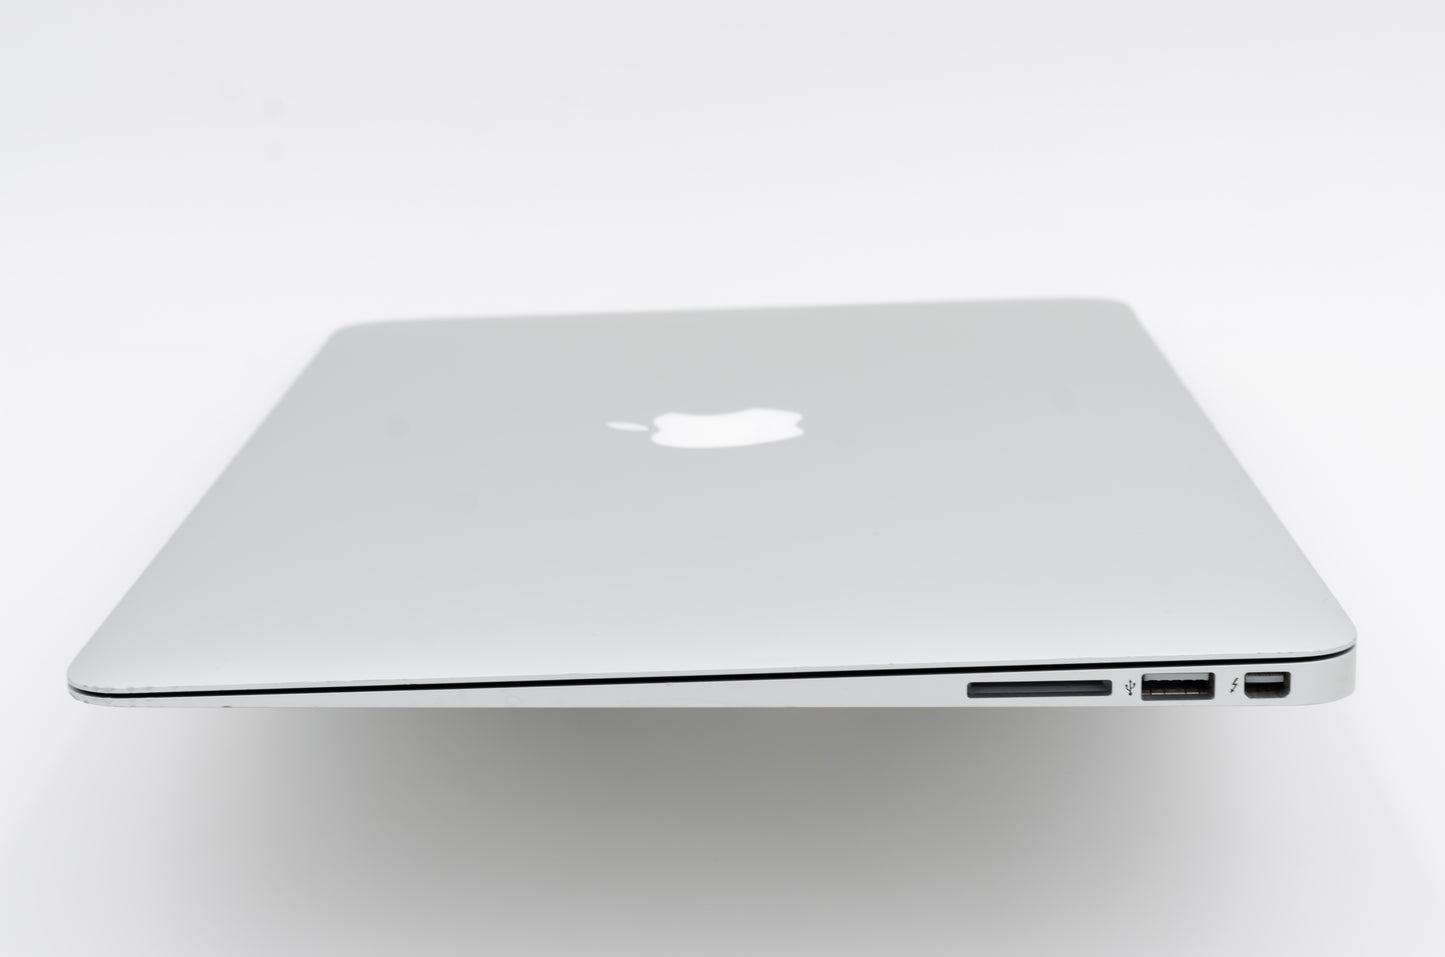 apple-mid-2011-13.3-inch-macbook-air-a1369-aluminum-dci7 - 1.8ghz processor, 4gb ram, hd 3000 - 348mb gpu-mc965ll/a-3